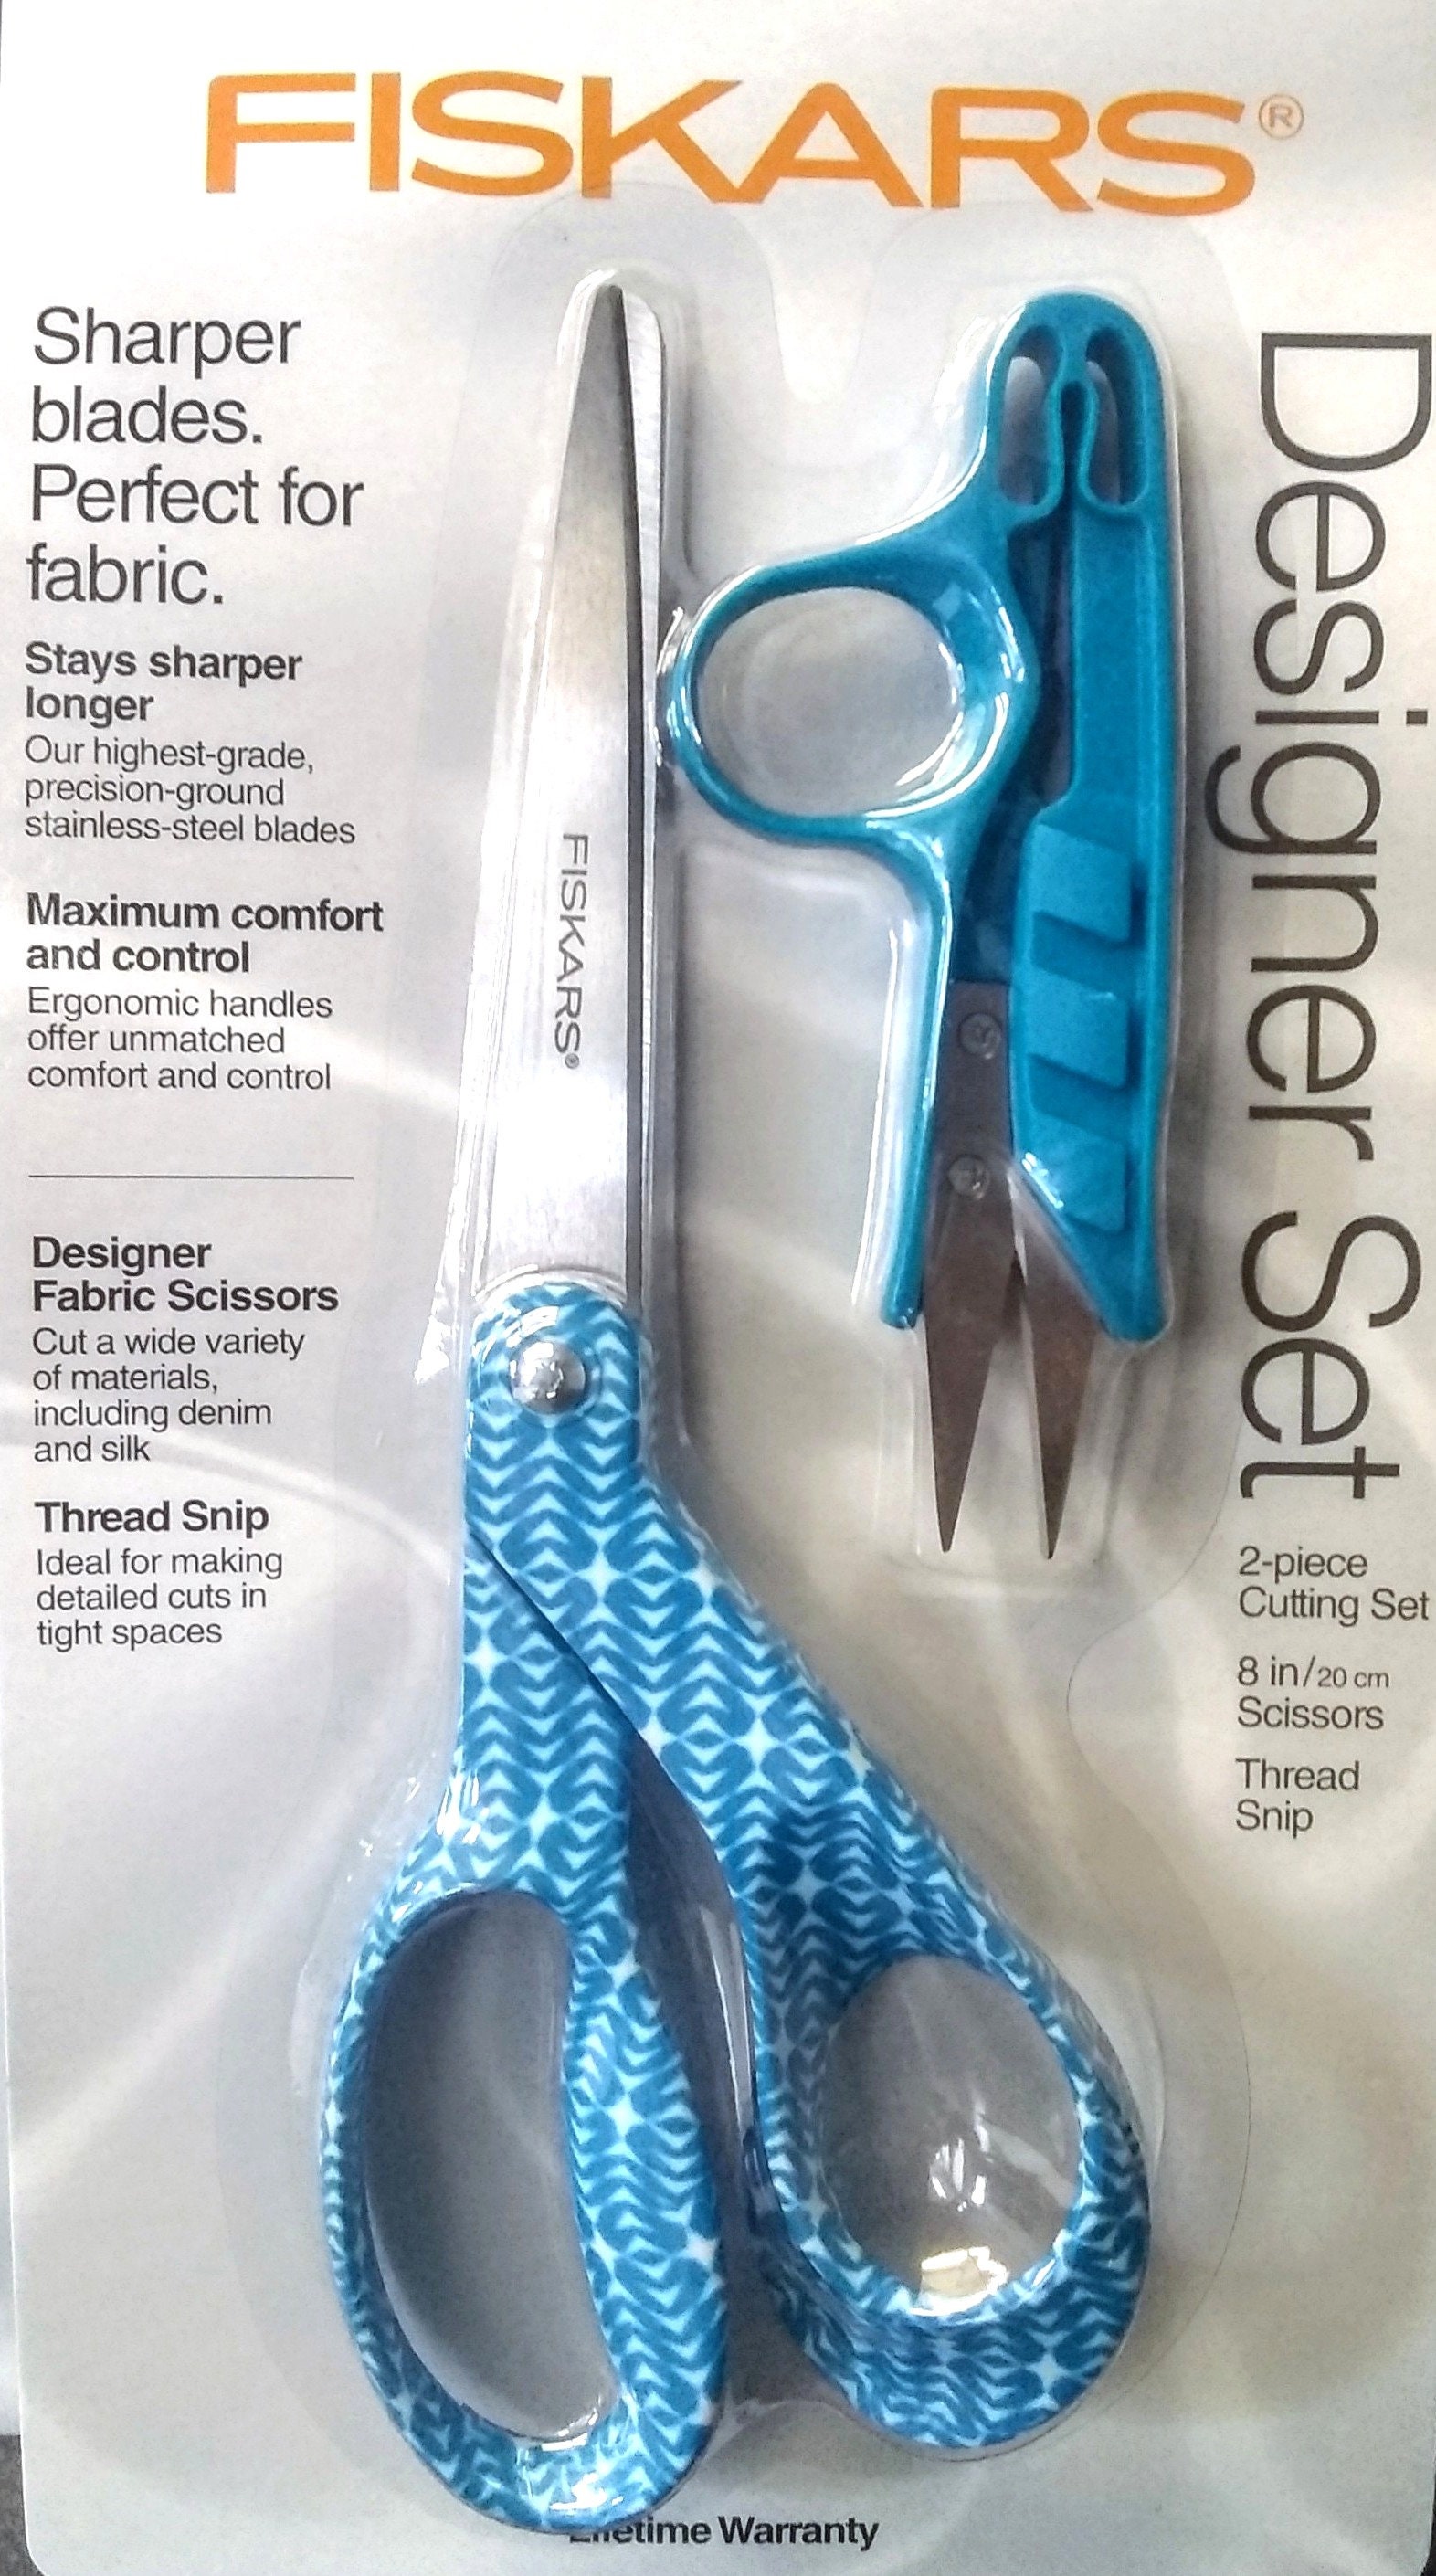 Singer 00151 3 Superior Cutting Folding Scissors FREE Quick Fix Travel Kit  